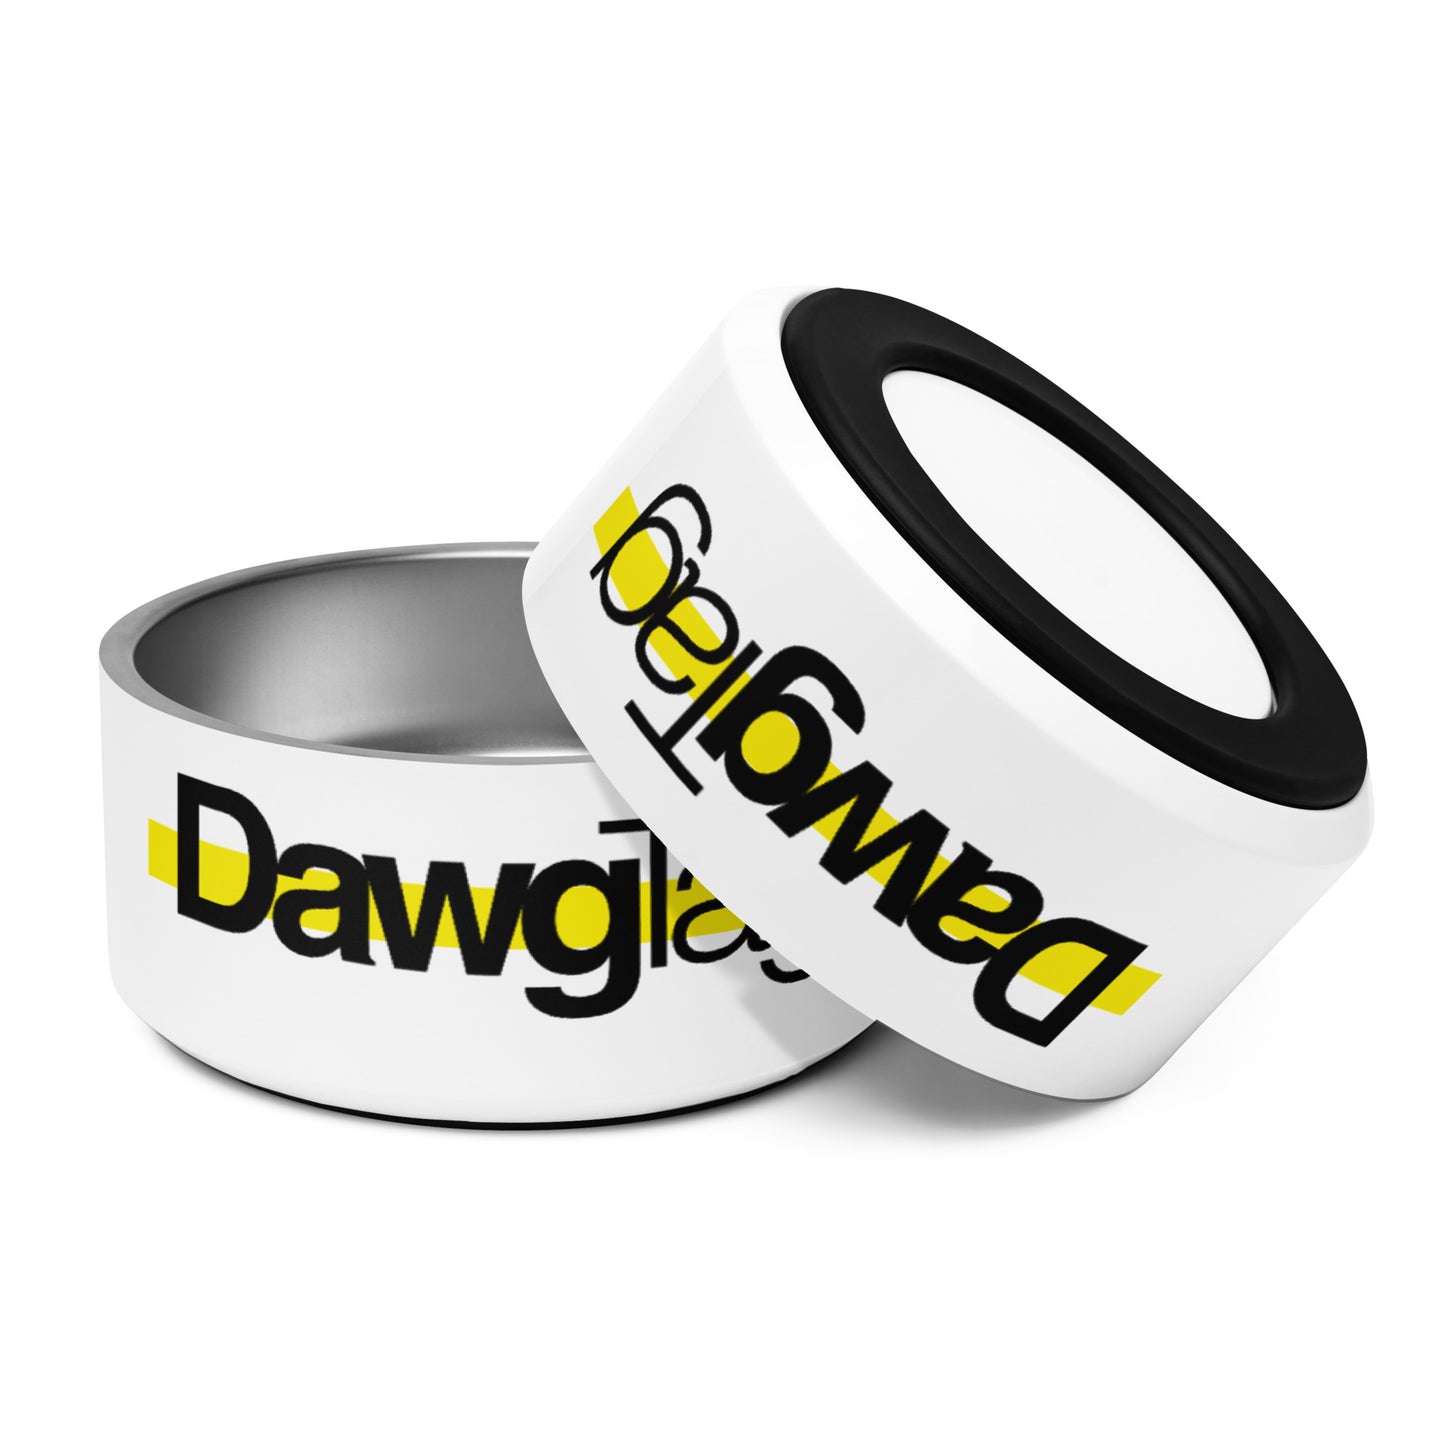 The DawgFood Bowl